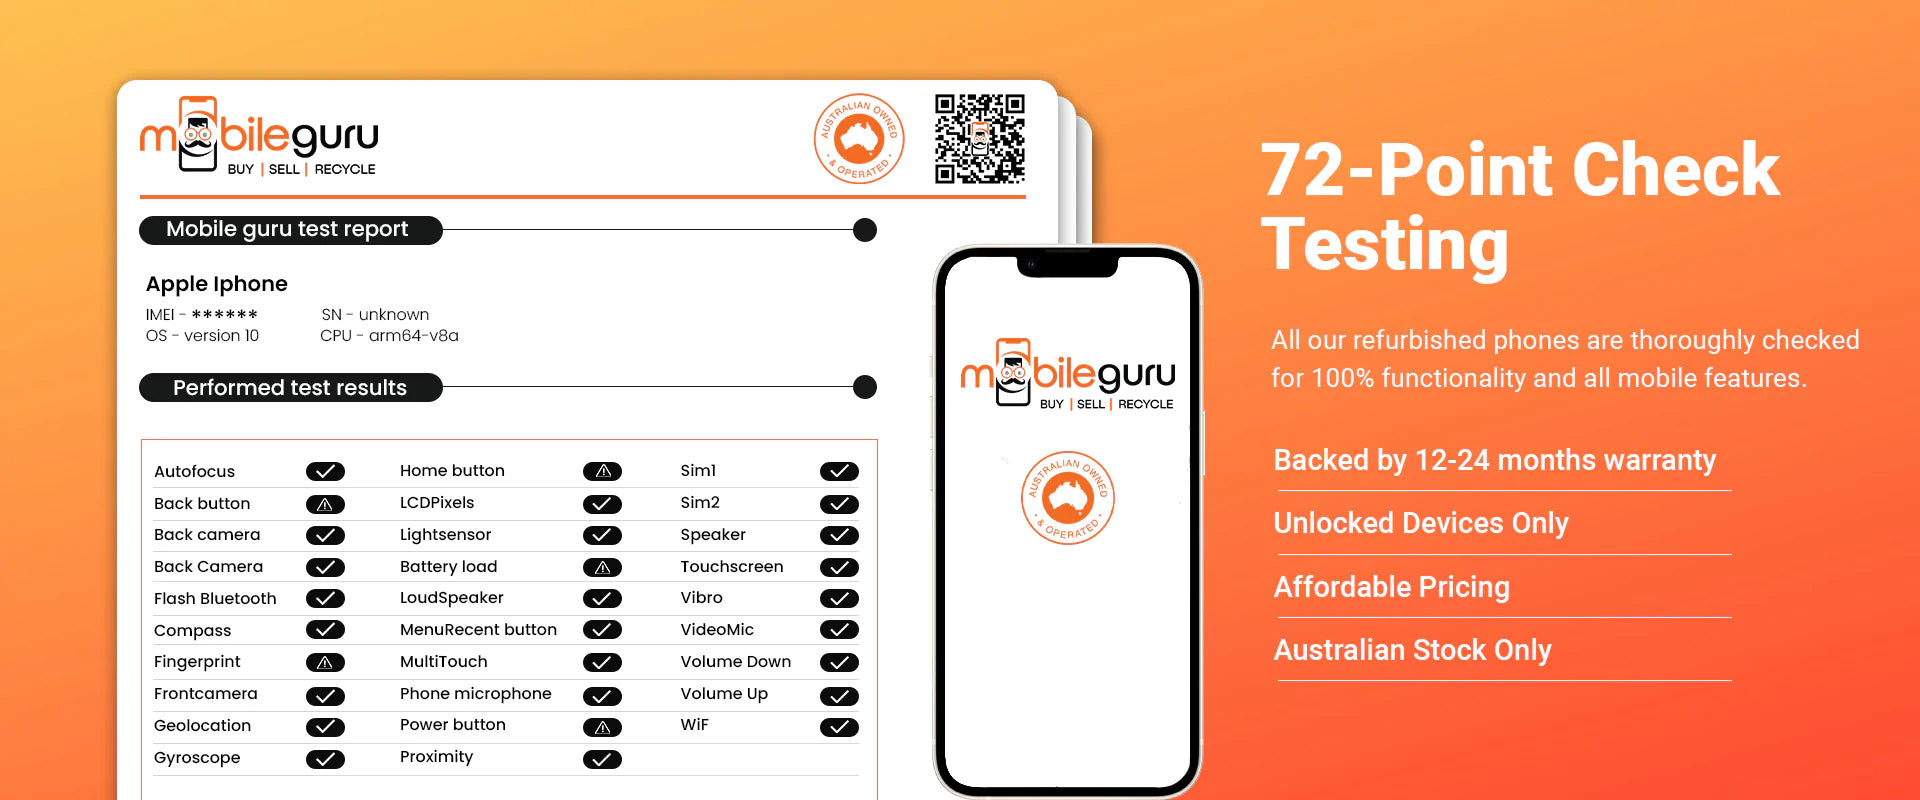 Refurbished iPhone Test Result at Mobile Guru